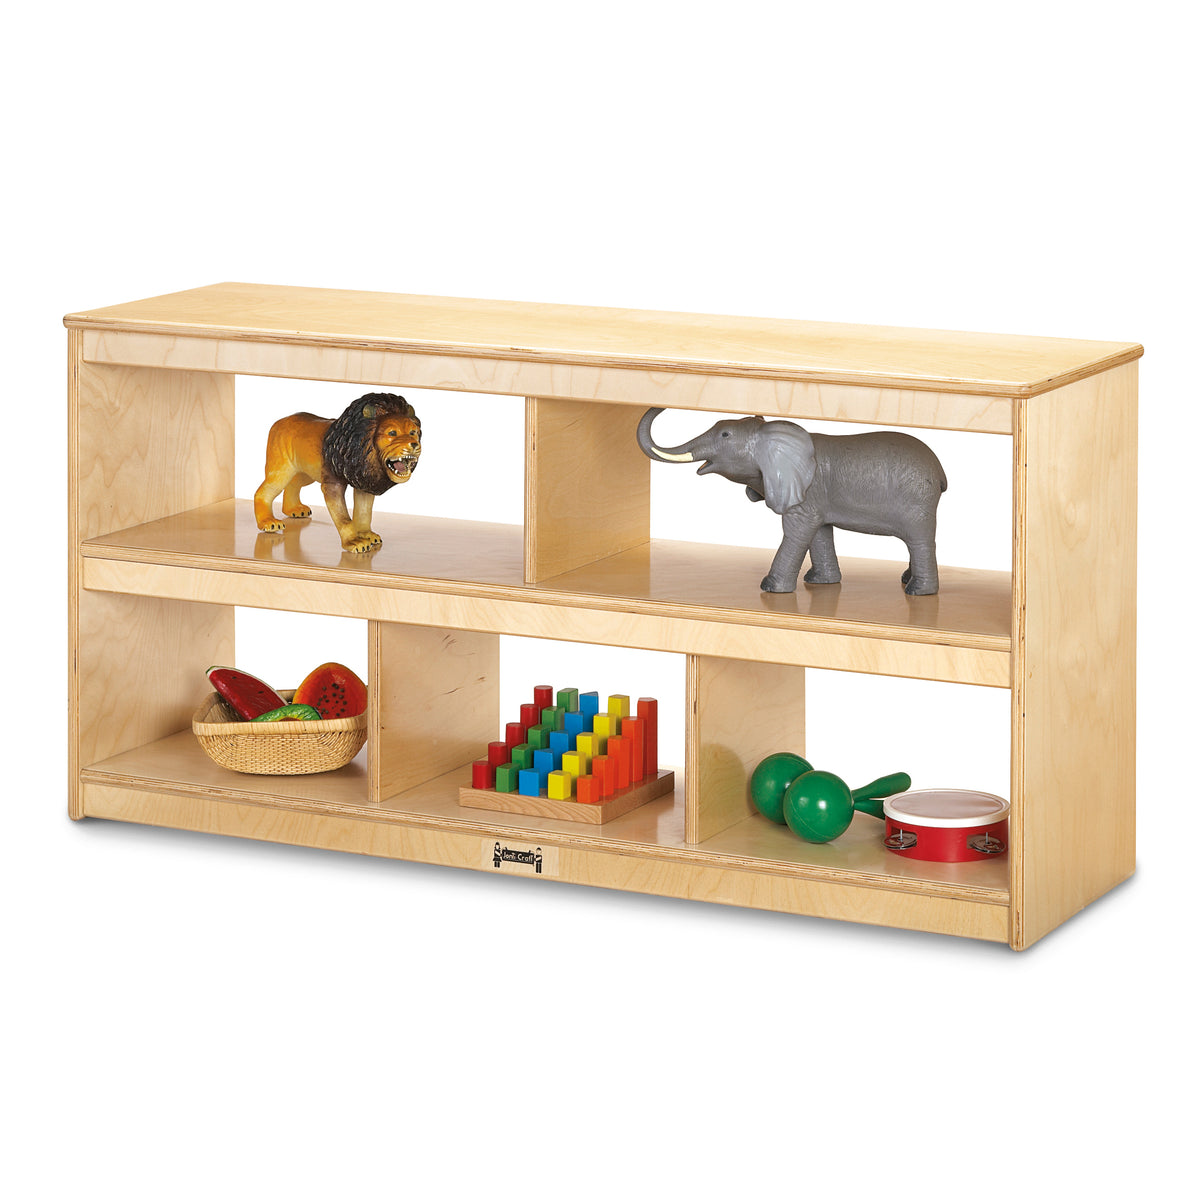 3198JC, Jonti-Craft Open Toddler Shelf